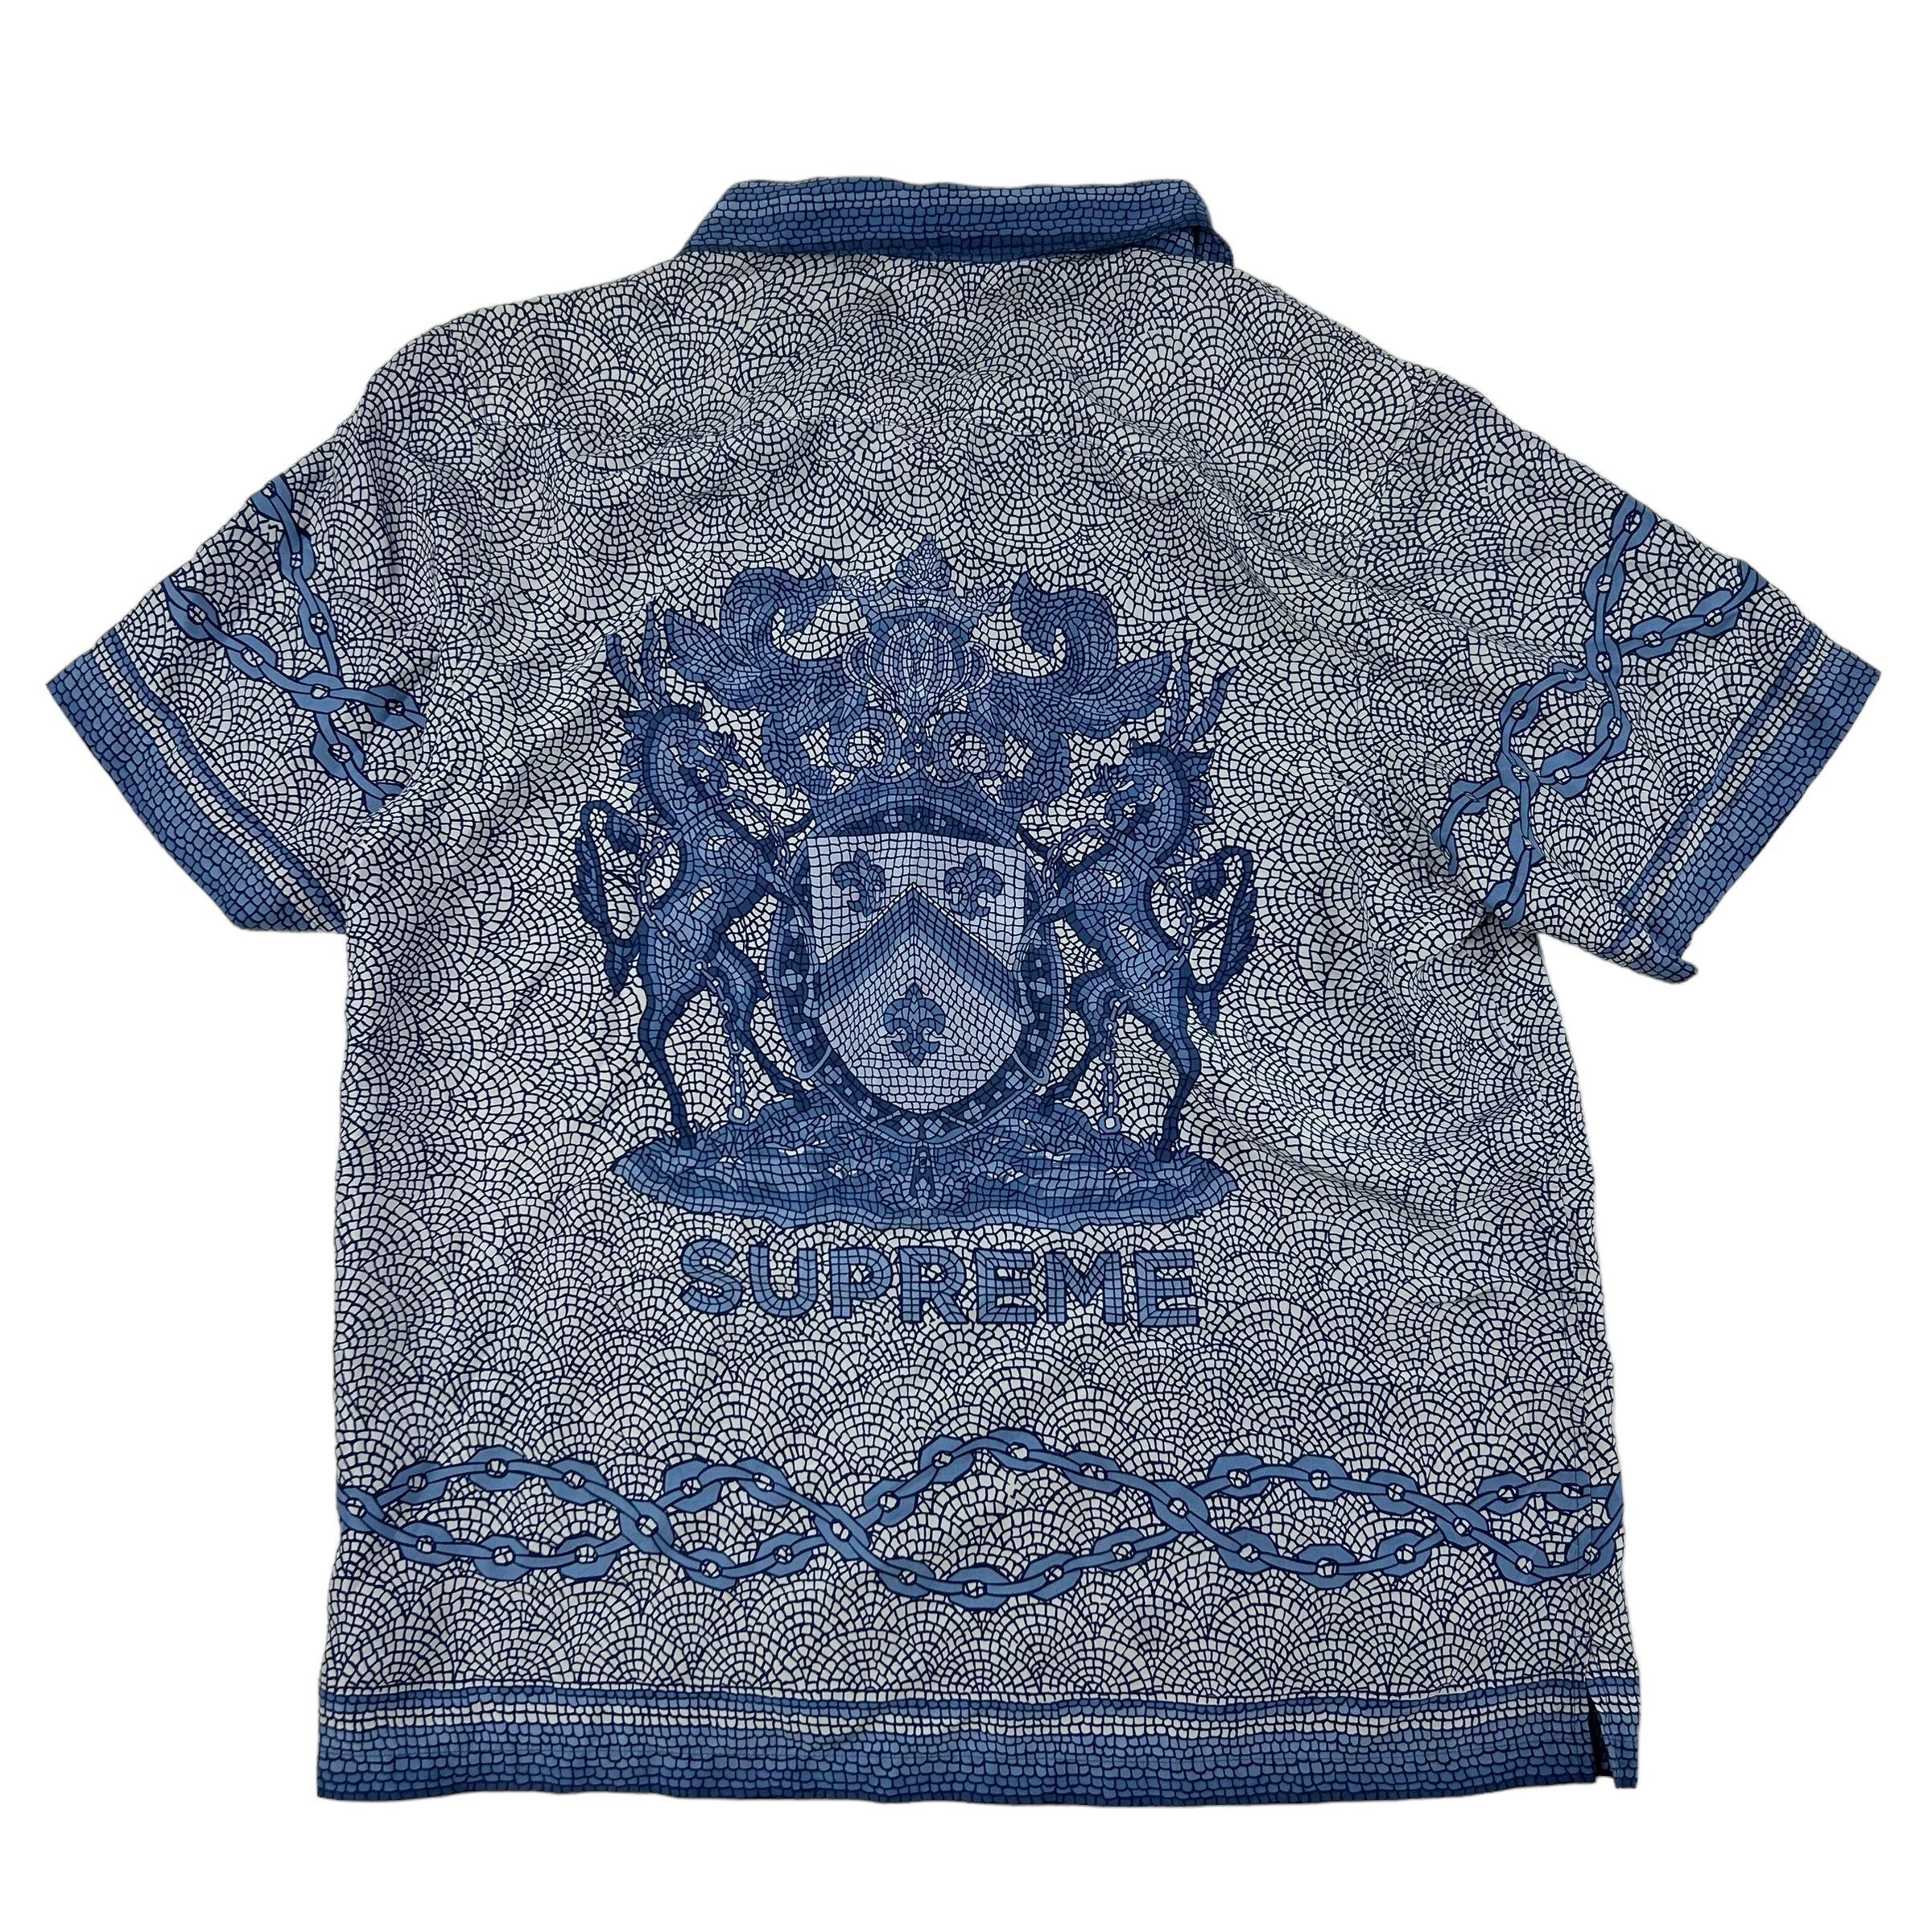 Supreme SS20 Supreme Mosaic Silk Button up shirt | Grailed